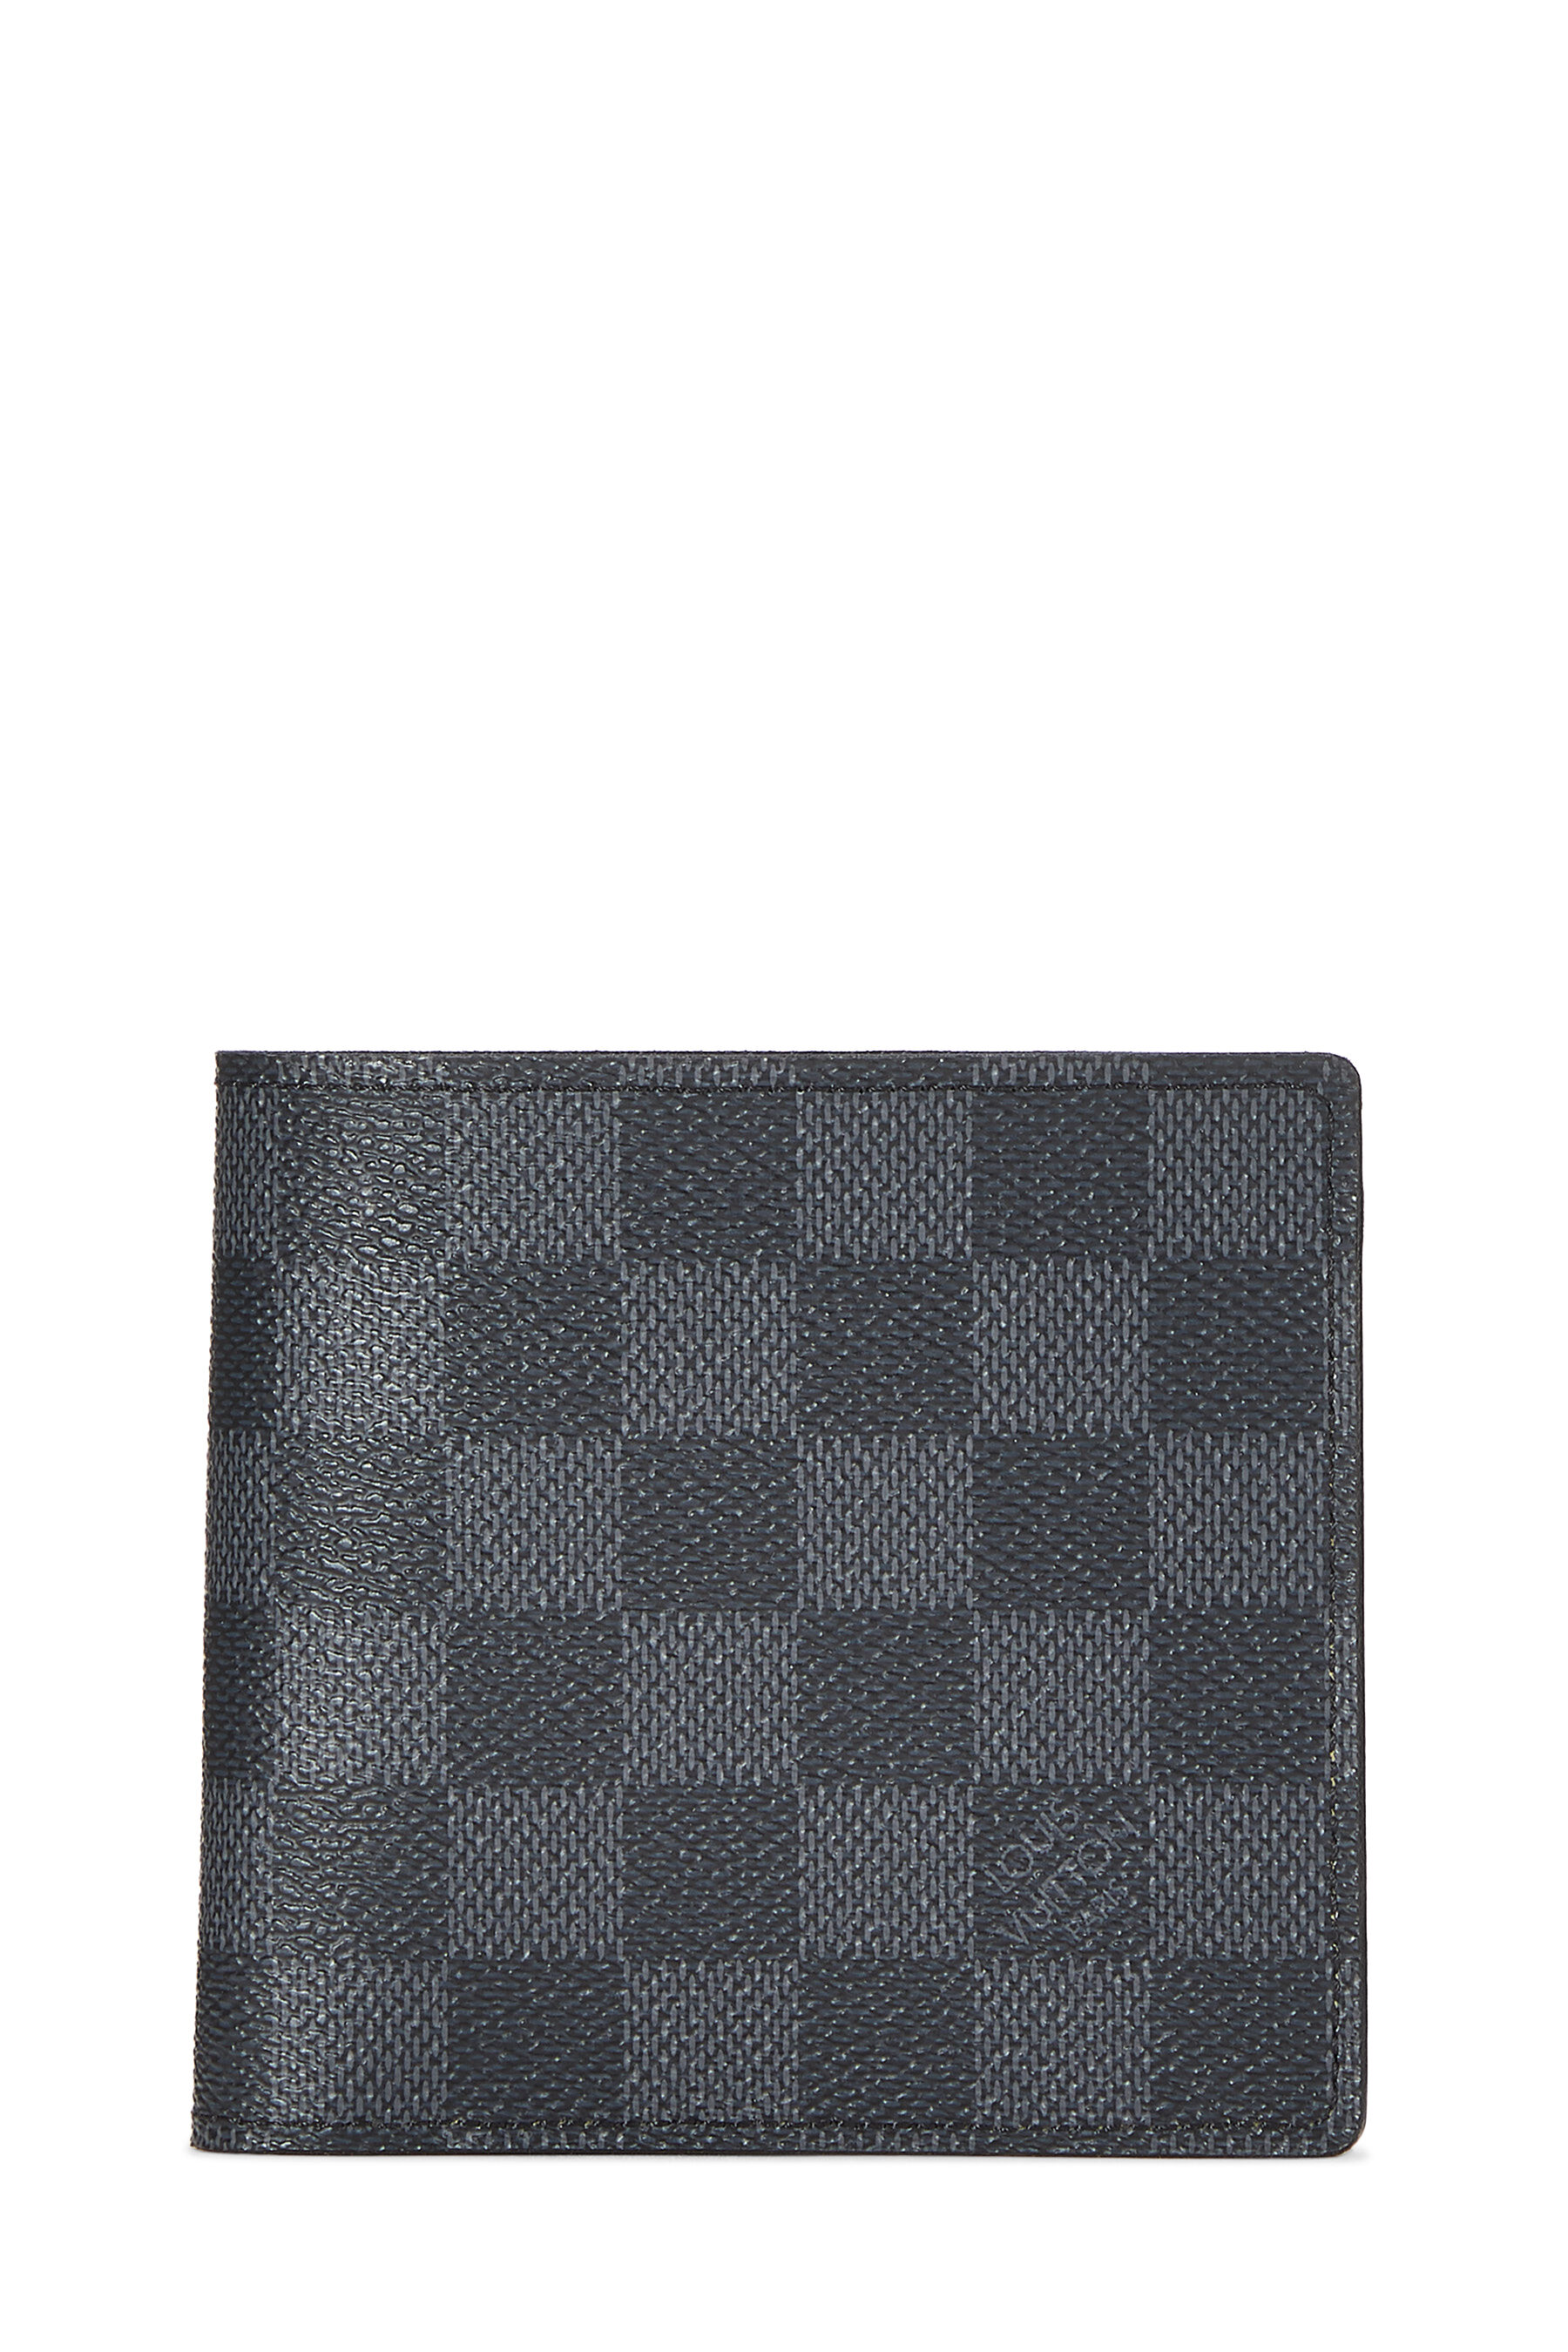 Louis Vuitton Marco Wallet Damier Graphite Black/Grey in Canvas - US